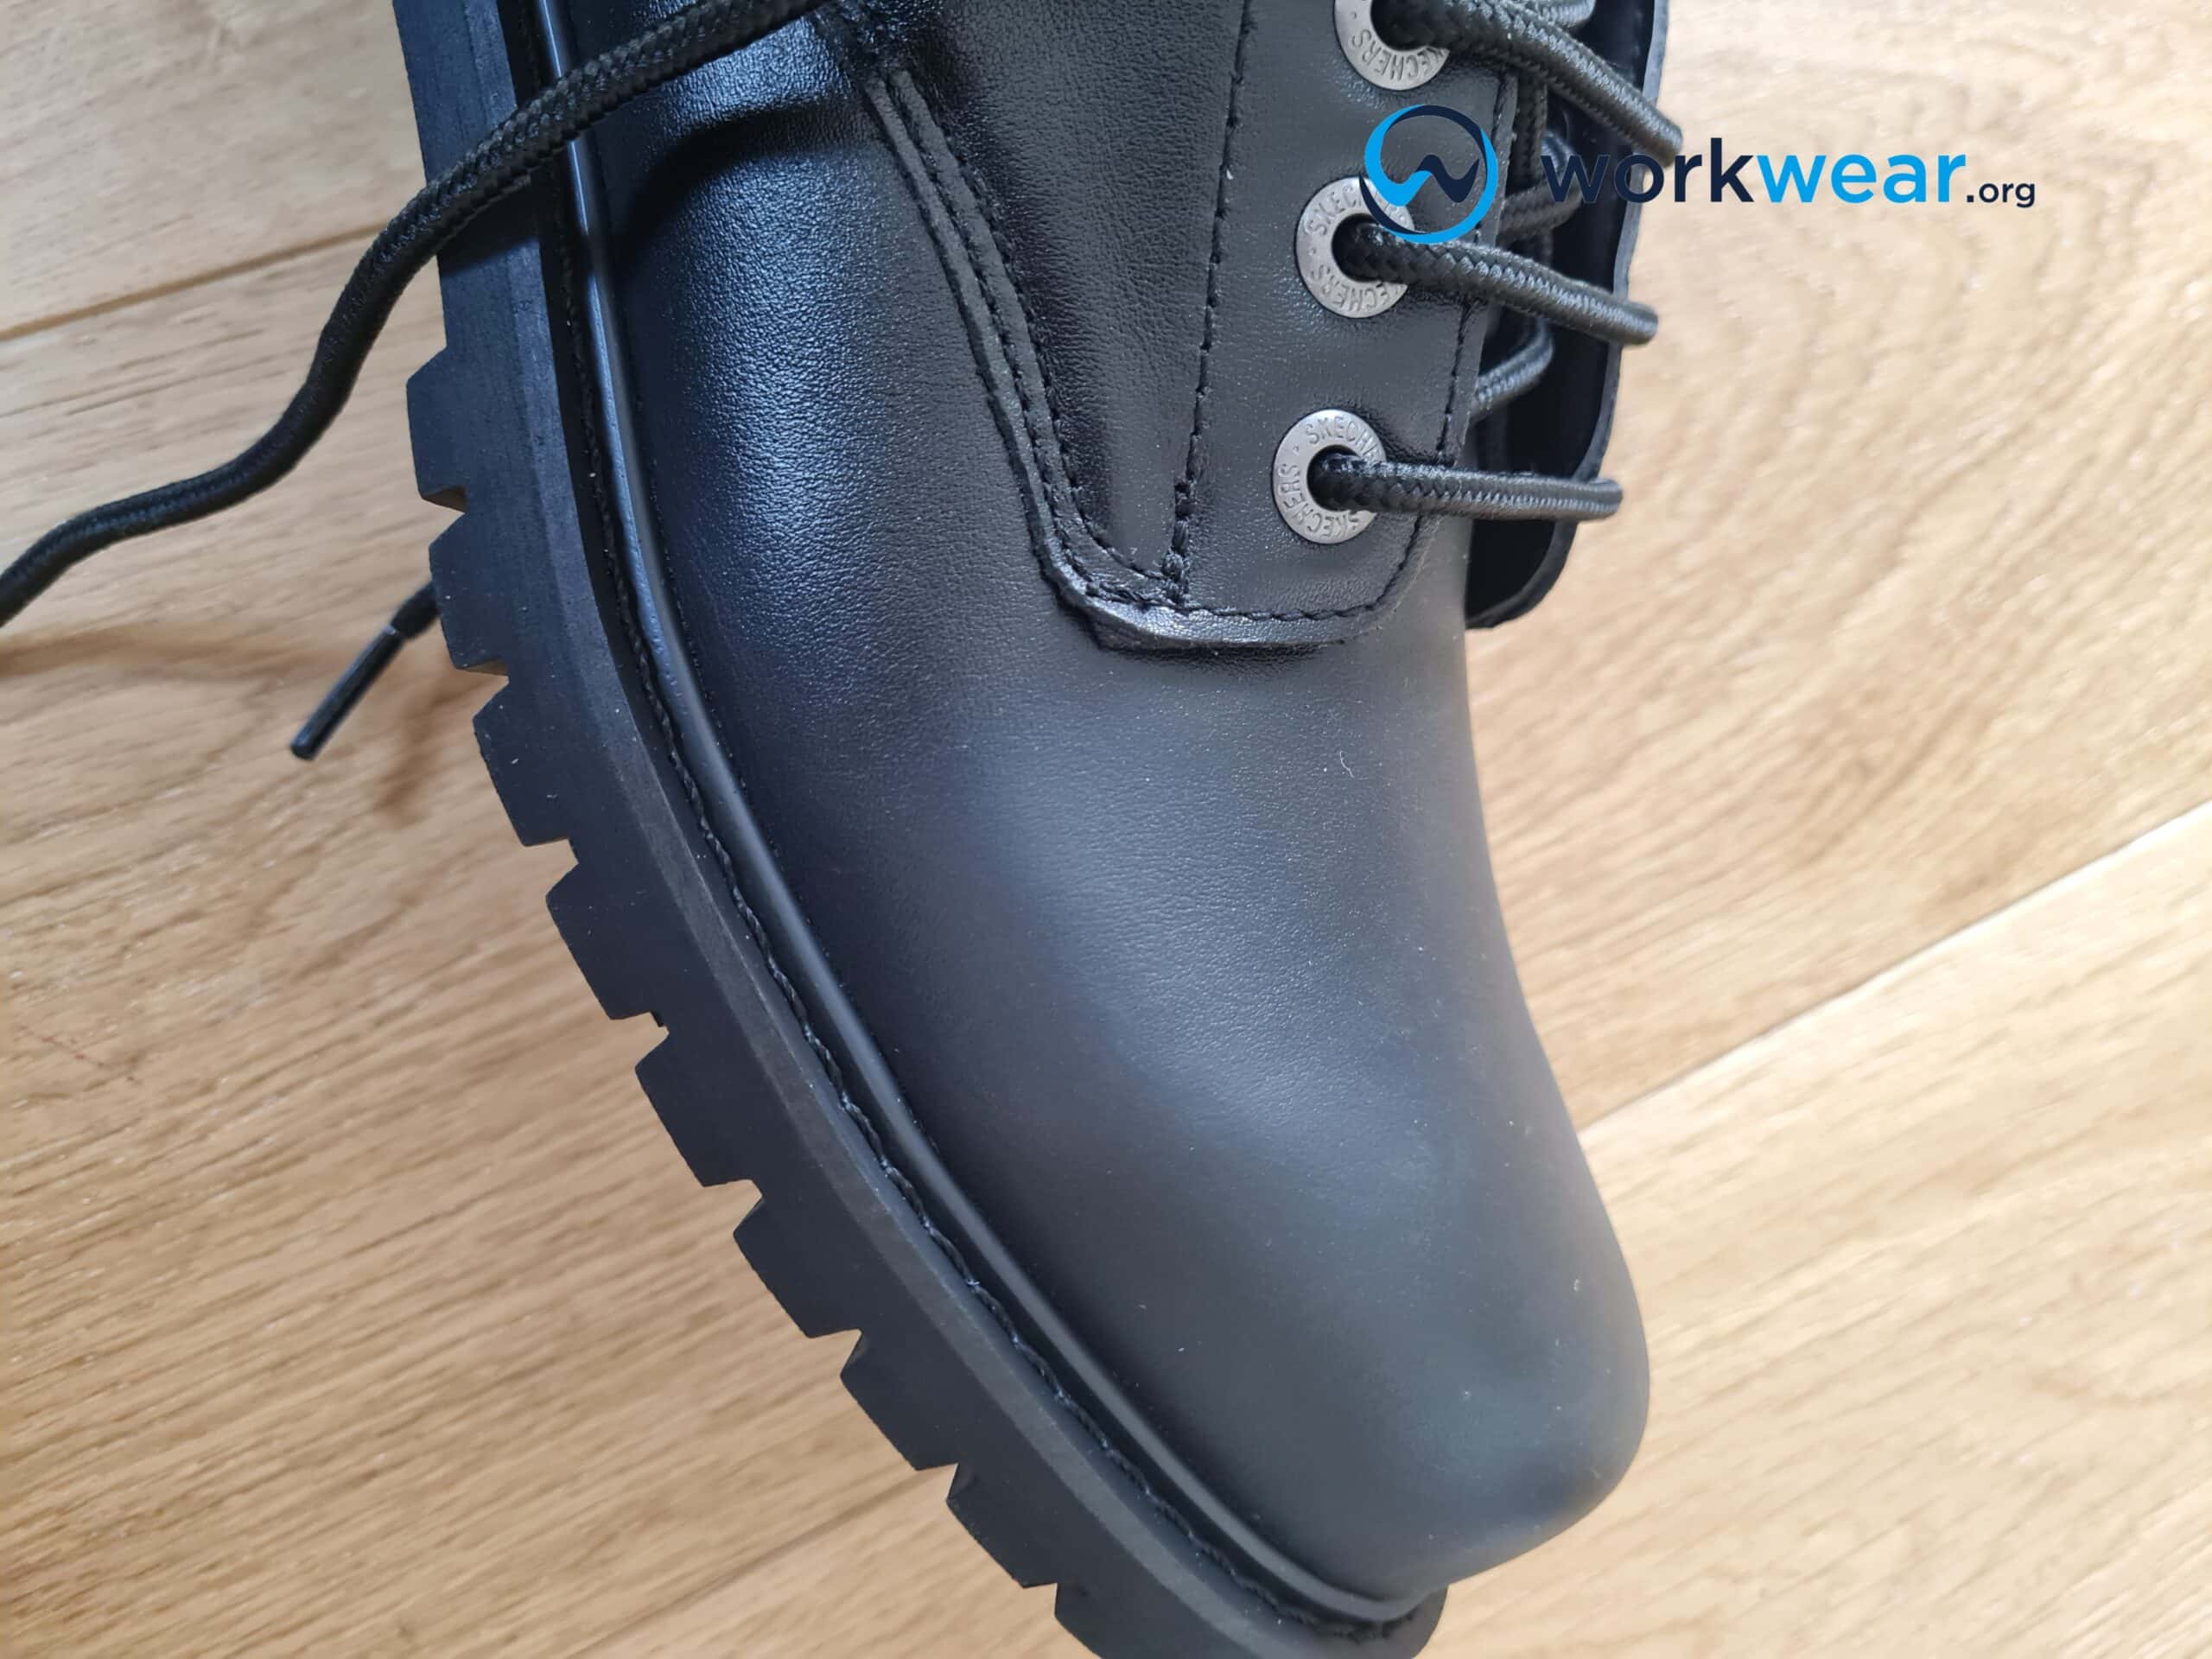 Skechers for Work Cottonwood Elks Slip-Resistant Shoe – A Detailed Review